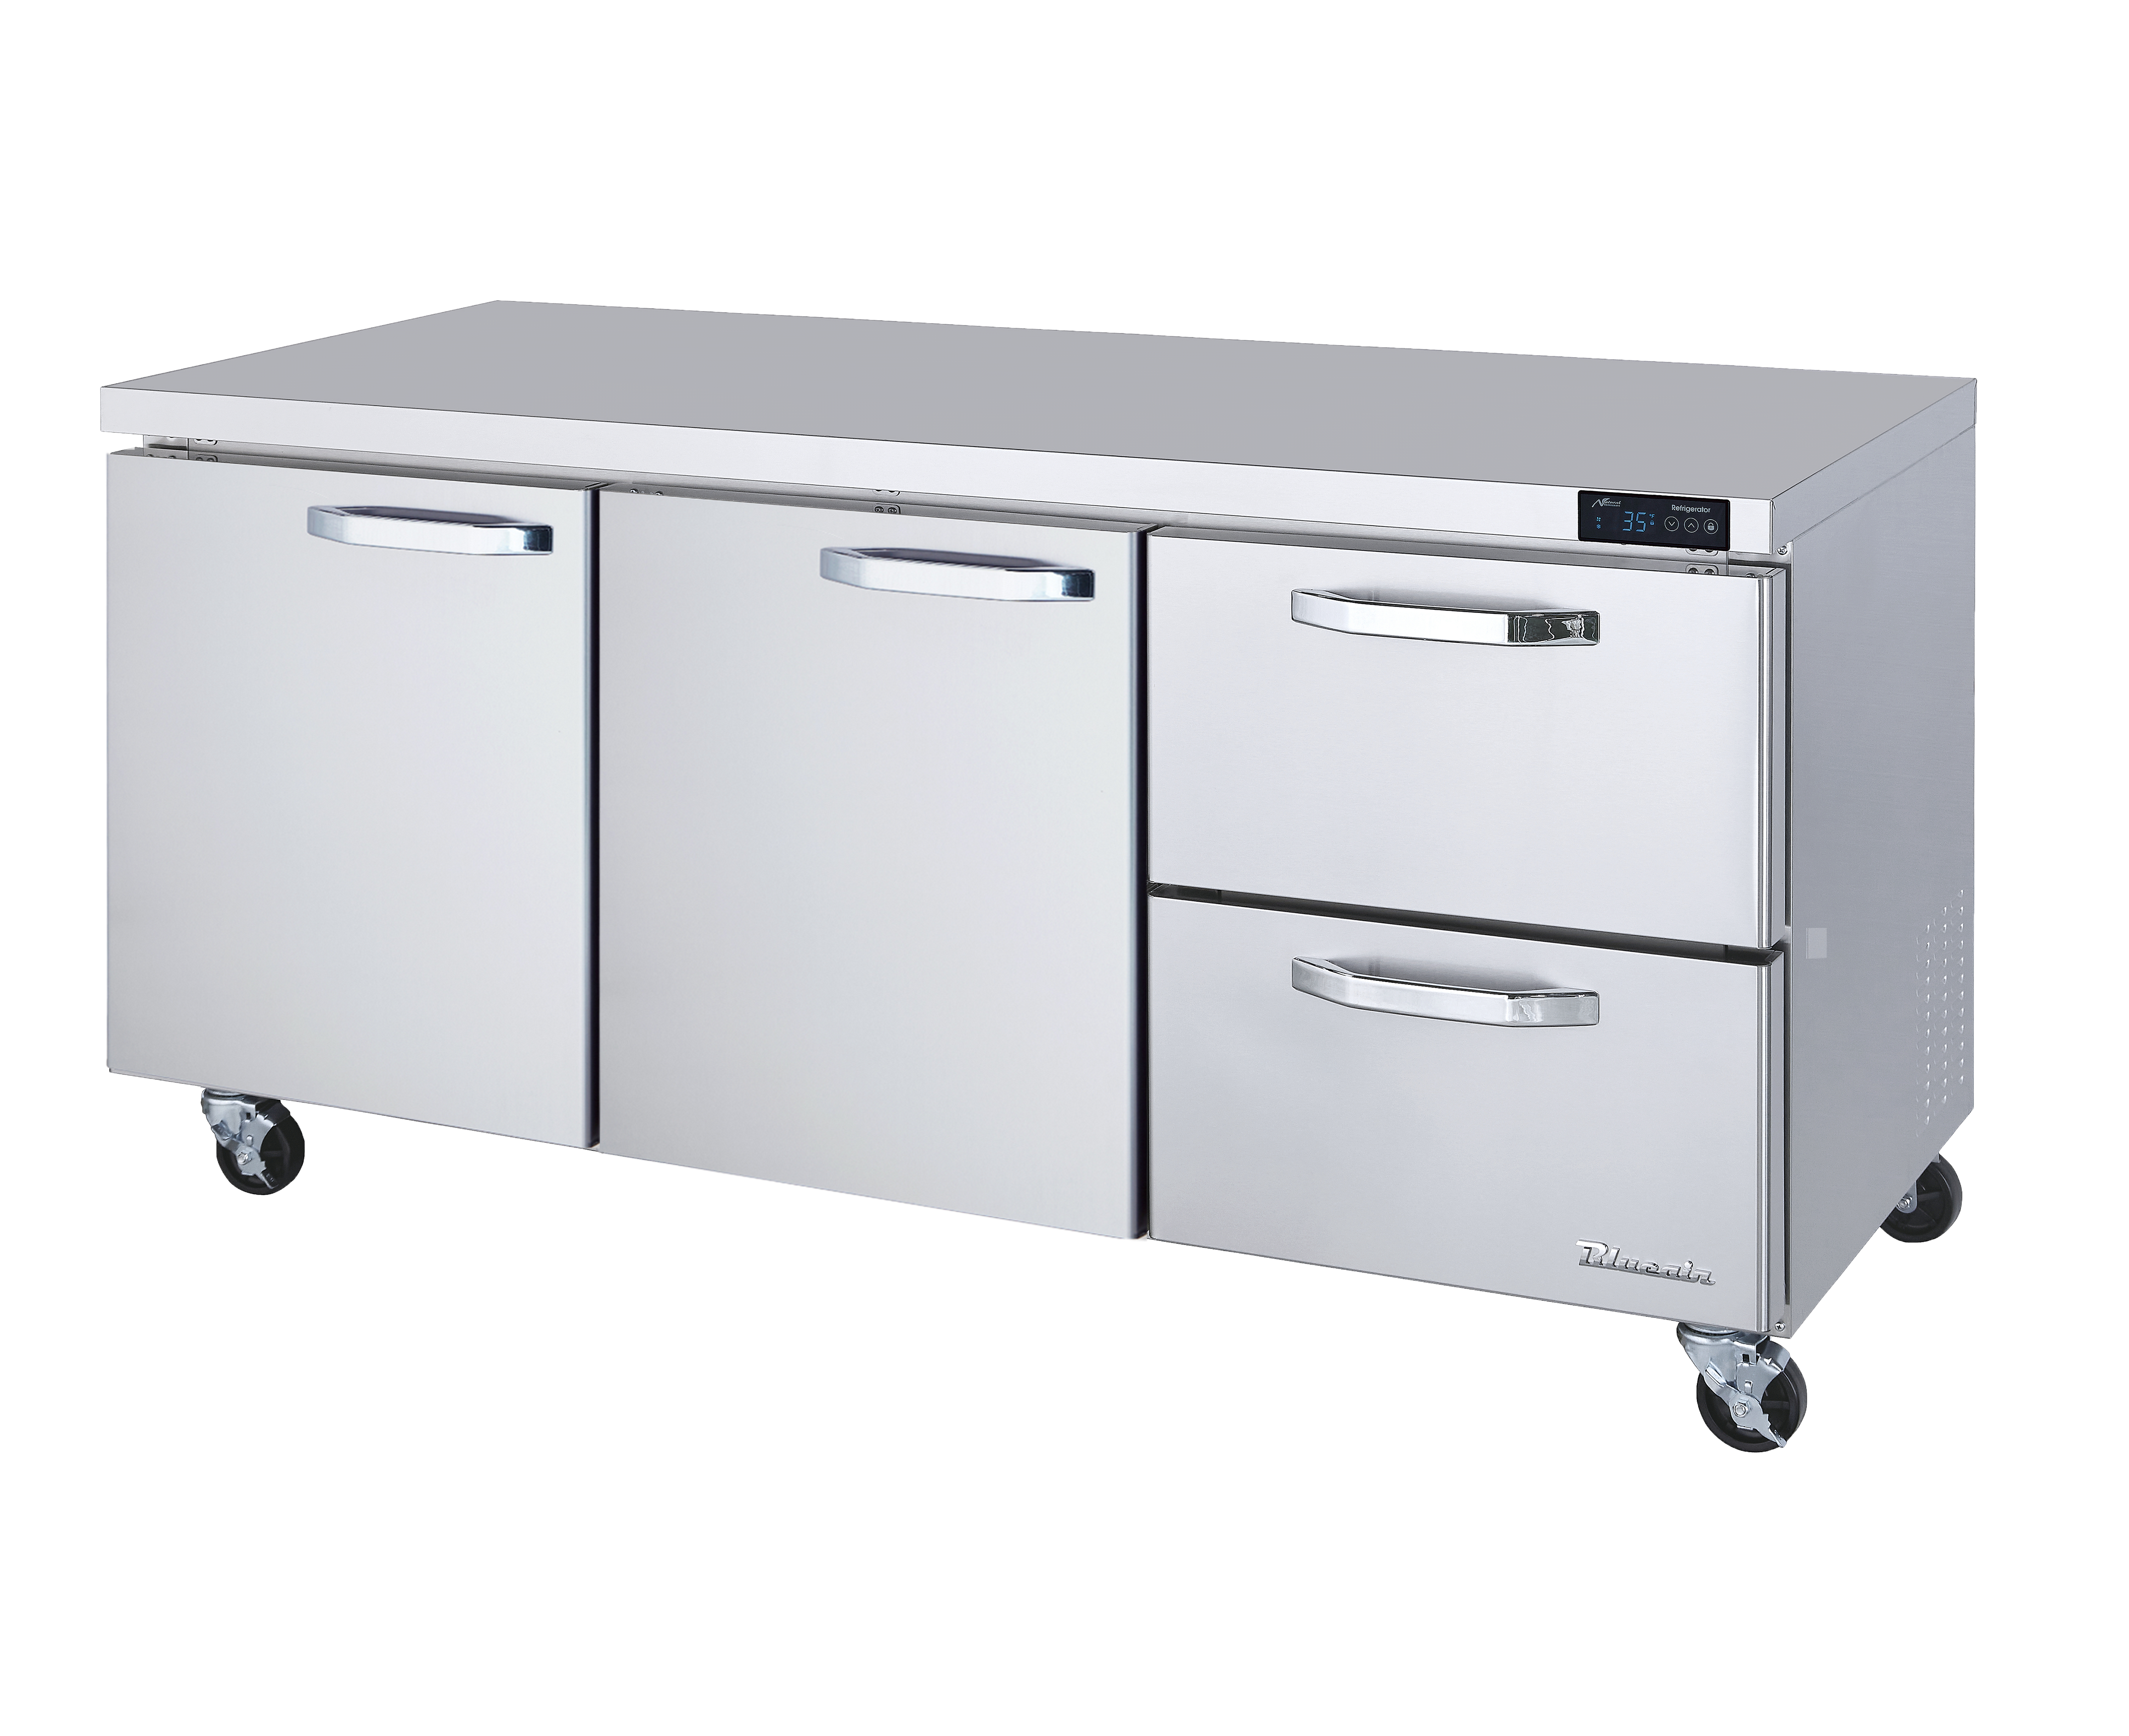 Blue Air - BLUR72-D2R-HC, 2 Drawers 2 Doors (L, M) All Stainless Undercounter Refrigerator - 72" wide, 20 cu/ft, R-290 Refrigerant